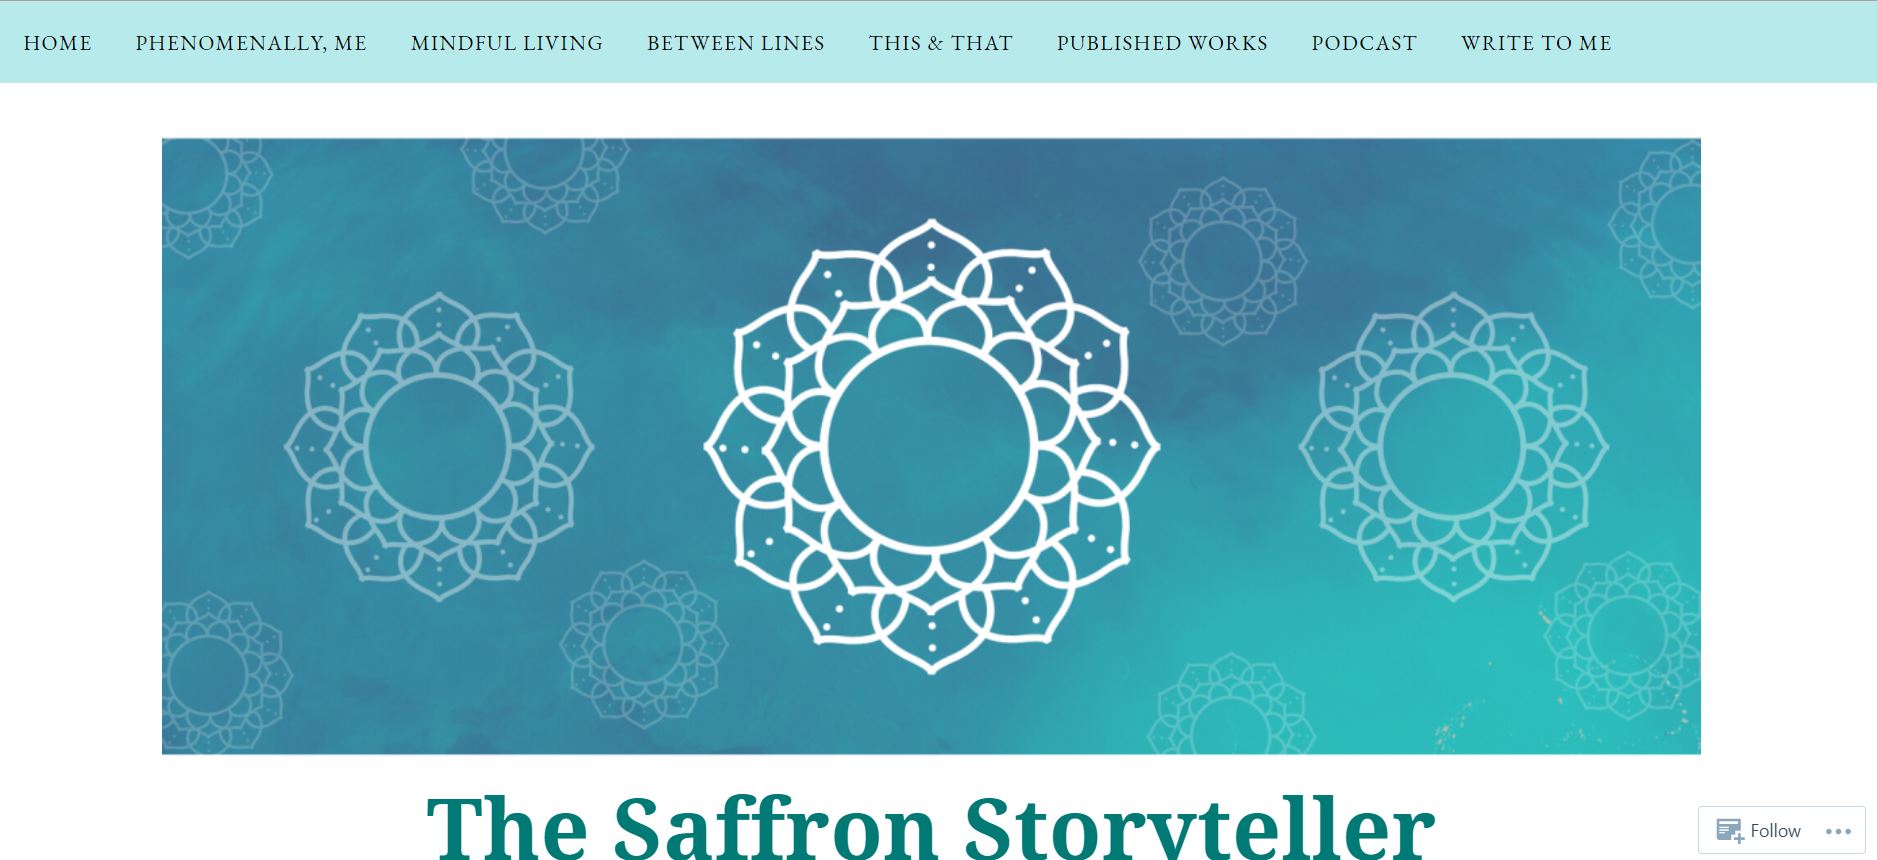 The Saffron Storyteller